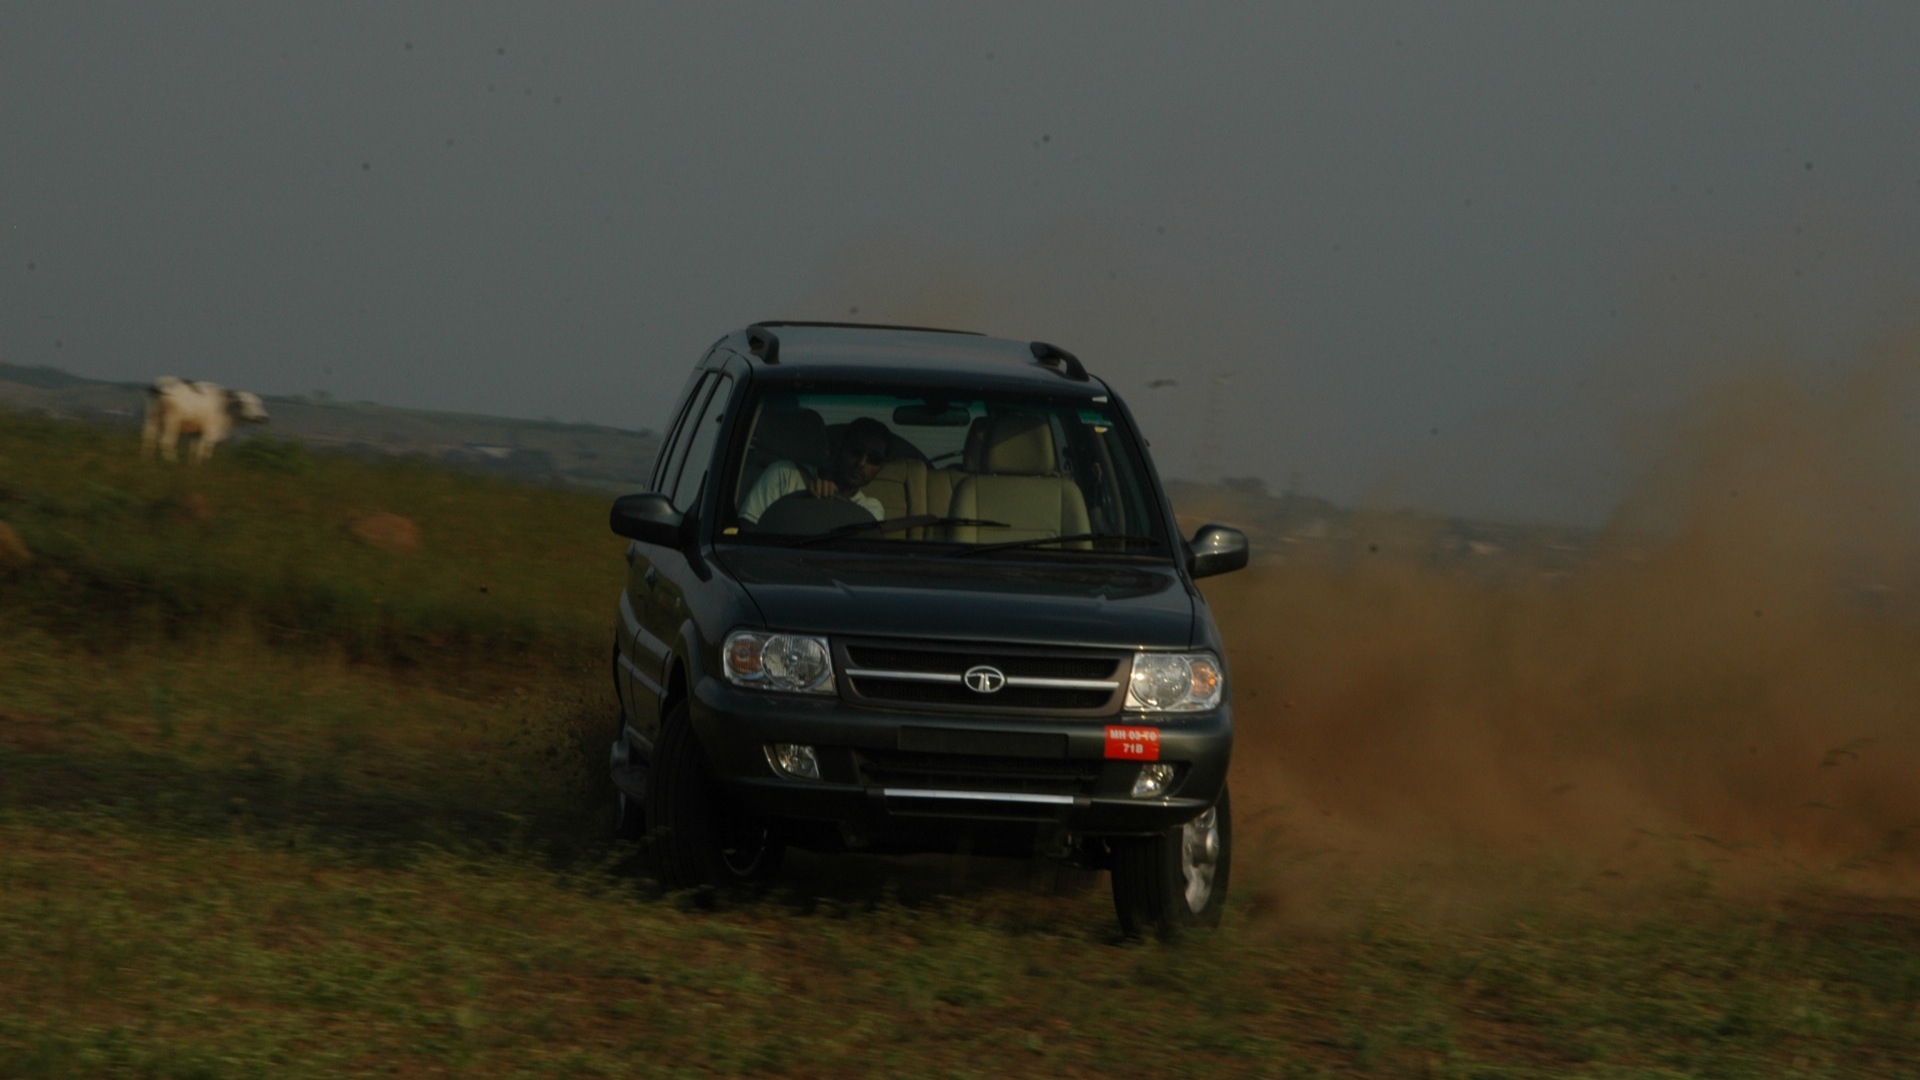 Tata-Safari-2013-2-2-Dicor-LX-2WD-Exterior